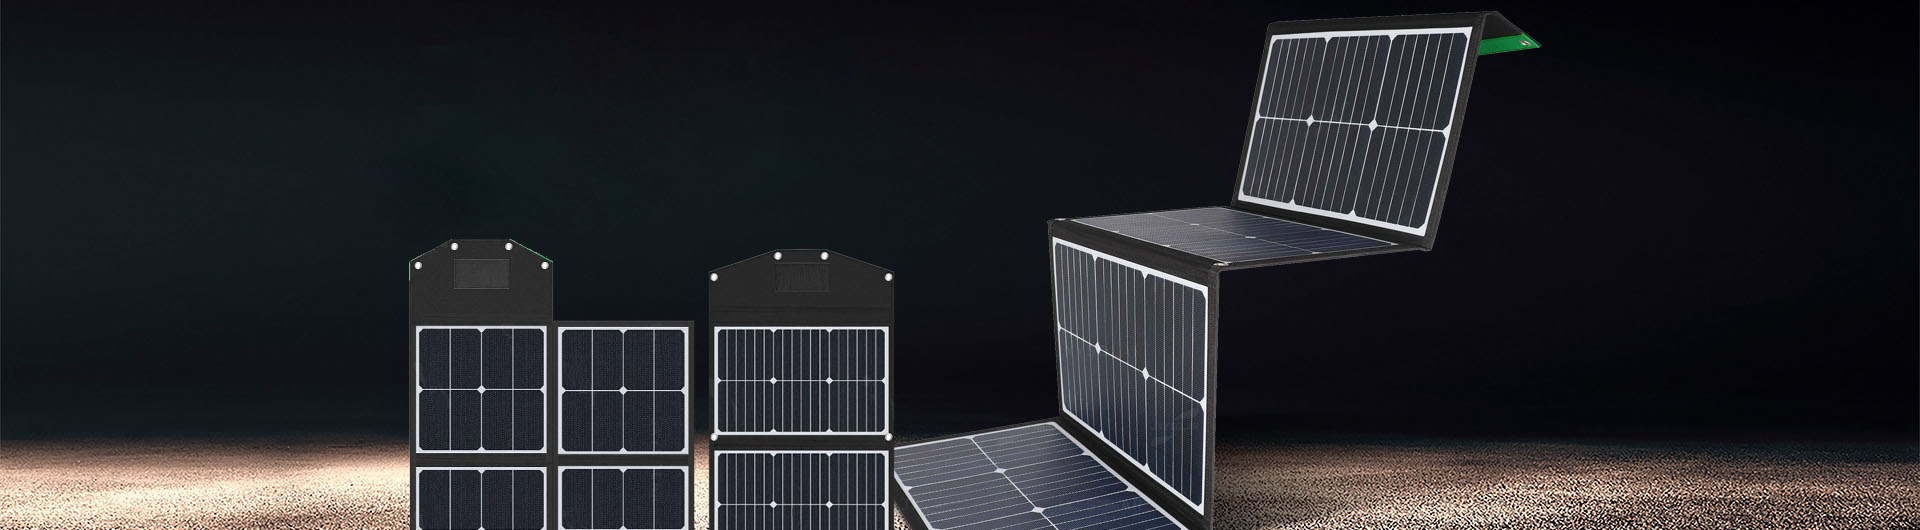 Solar charging system, solar panel